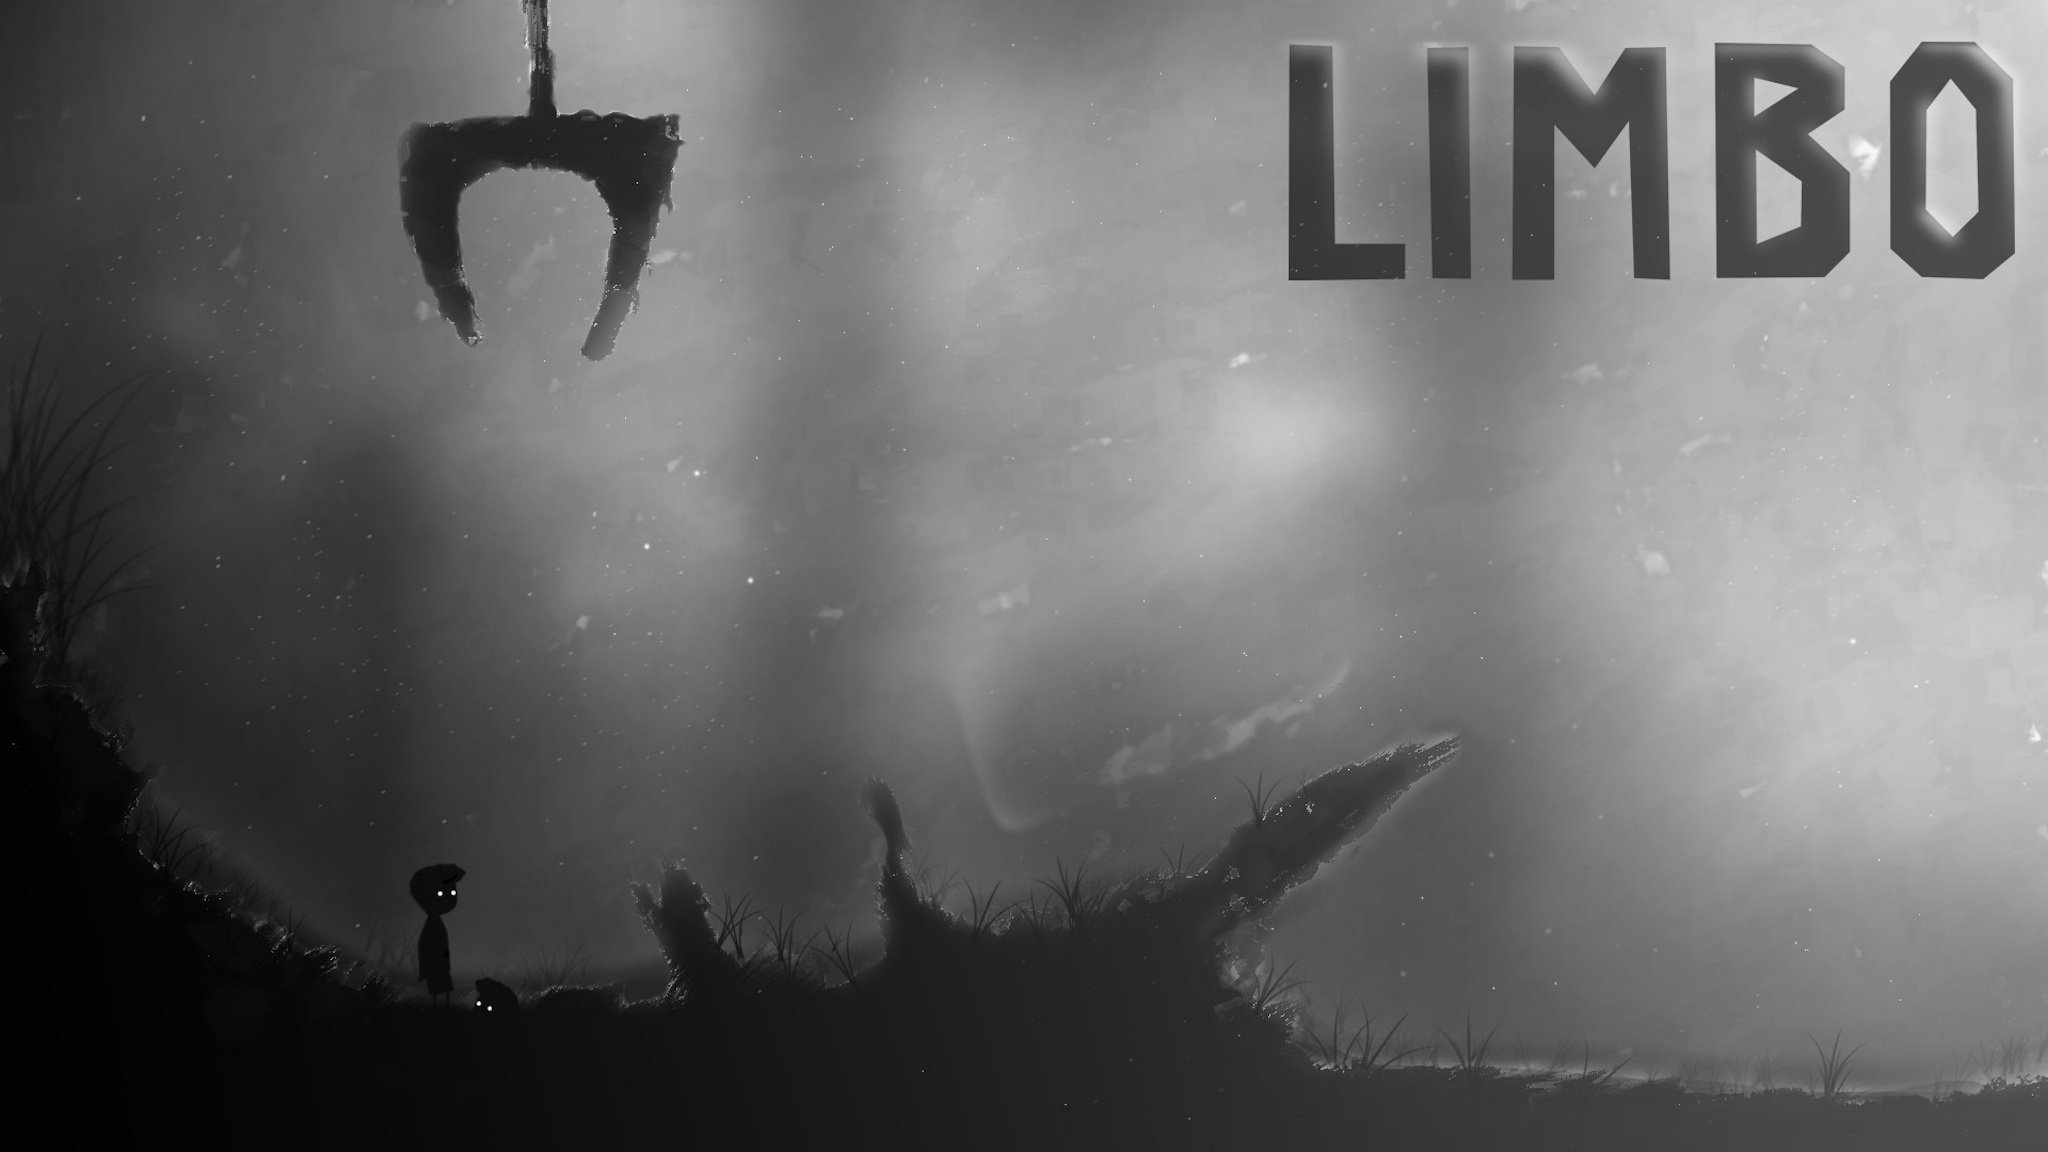 Watch and win as we play darkly beautiful platformer Limbo tonight on Twitch